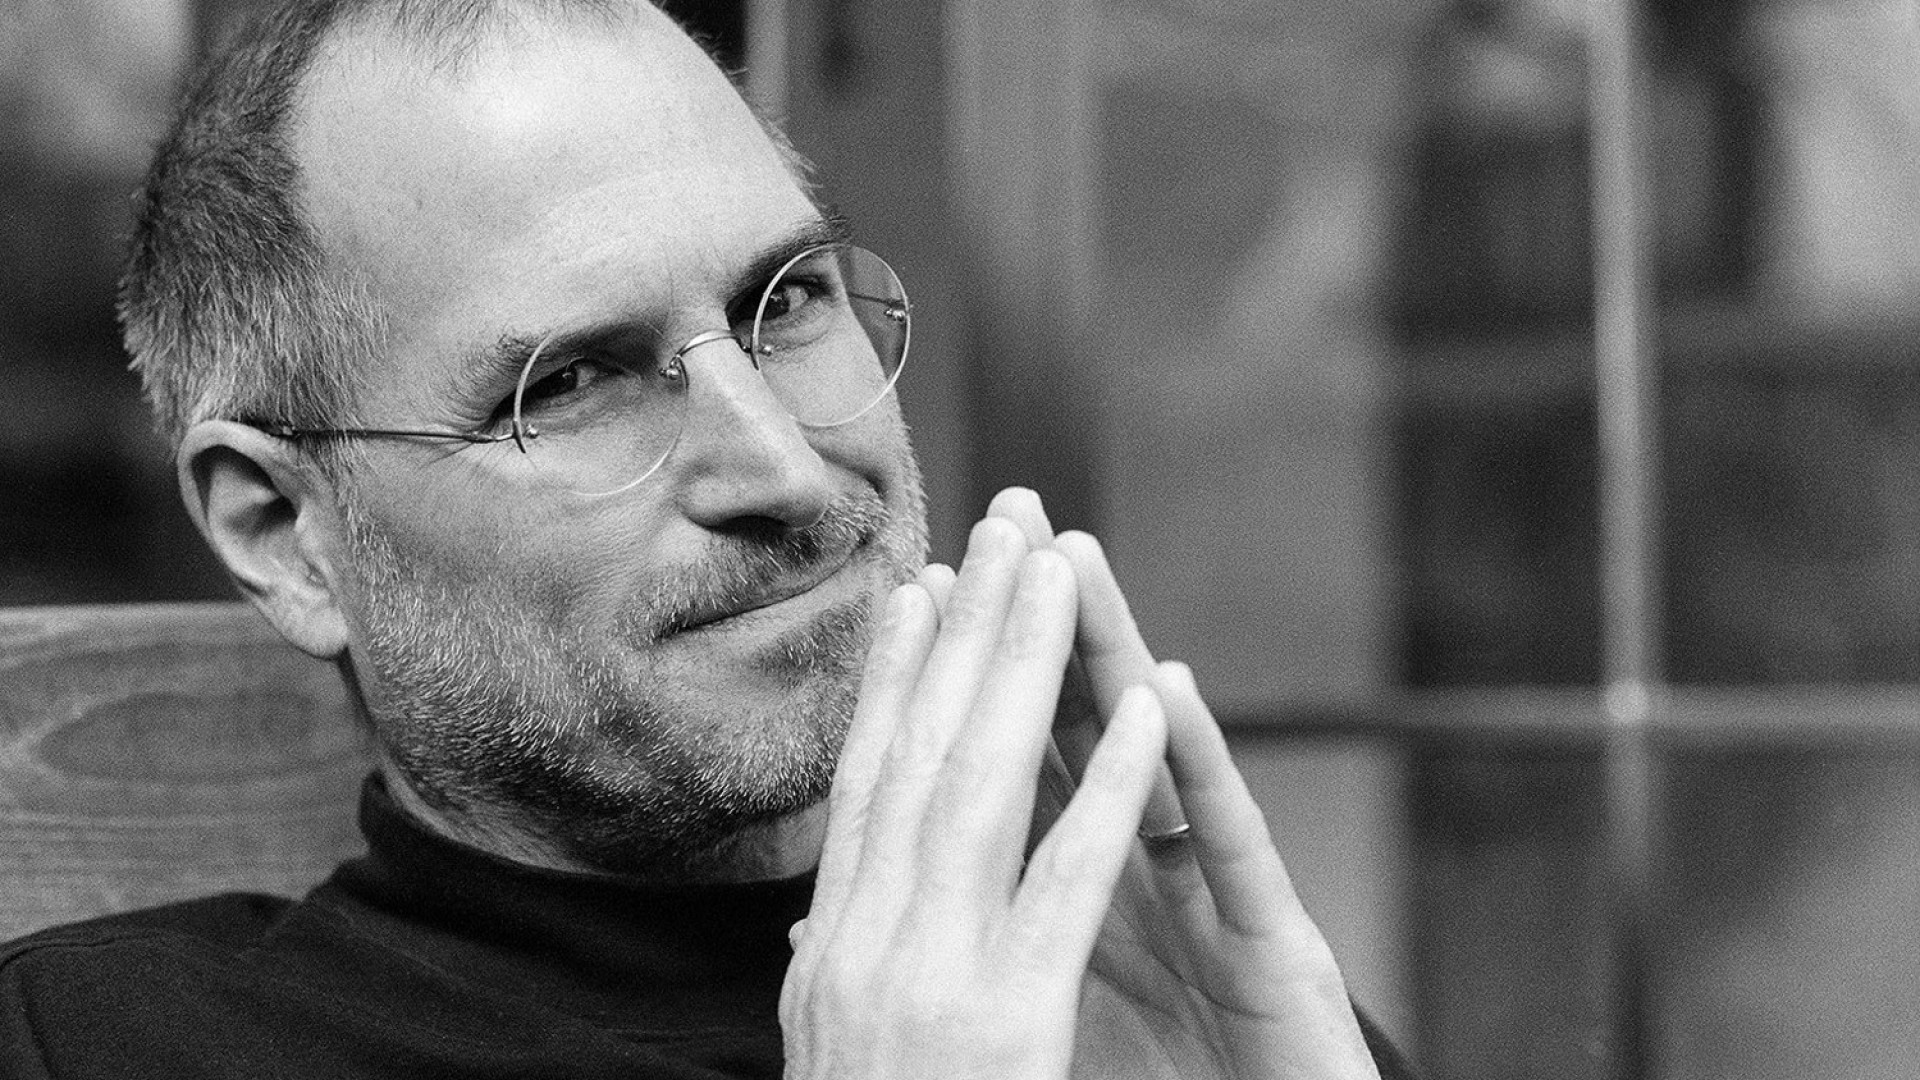 Steve Jobs Pics, Celebrity Collection